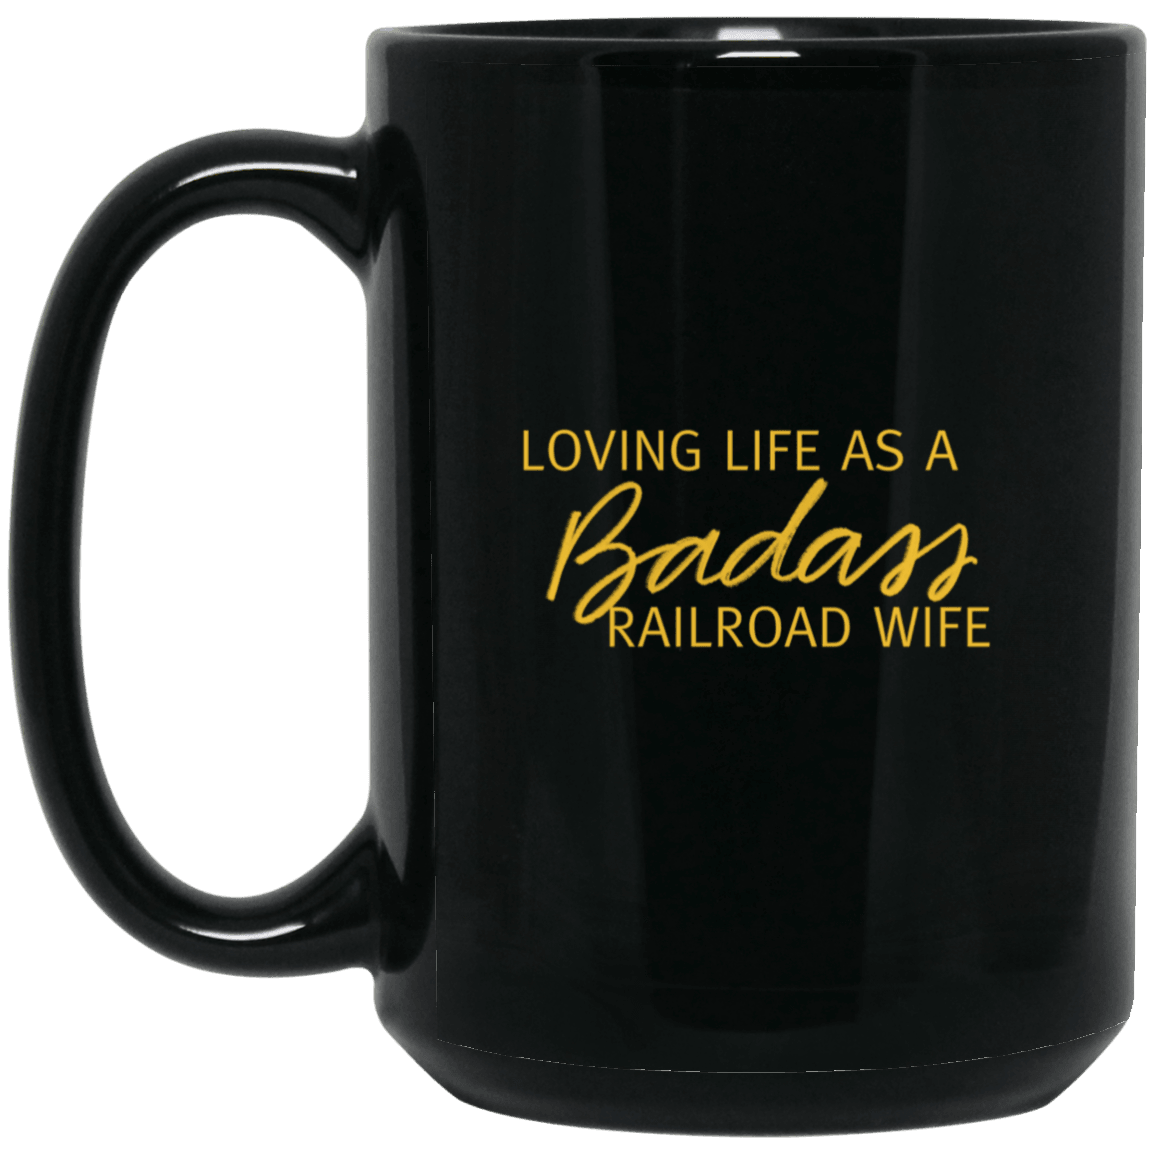 Loving Life as a Badass Railroad Wife 15 oz. Black Mug - Broken Knuckle Apparel